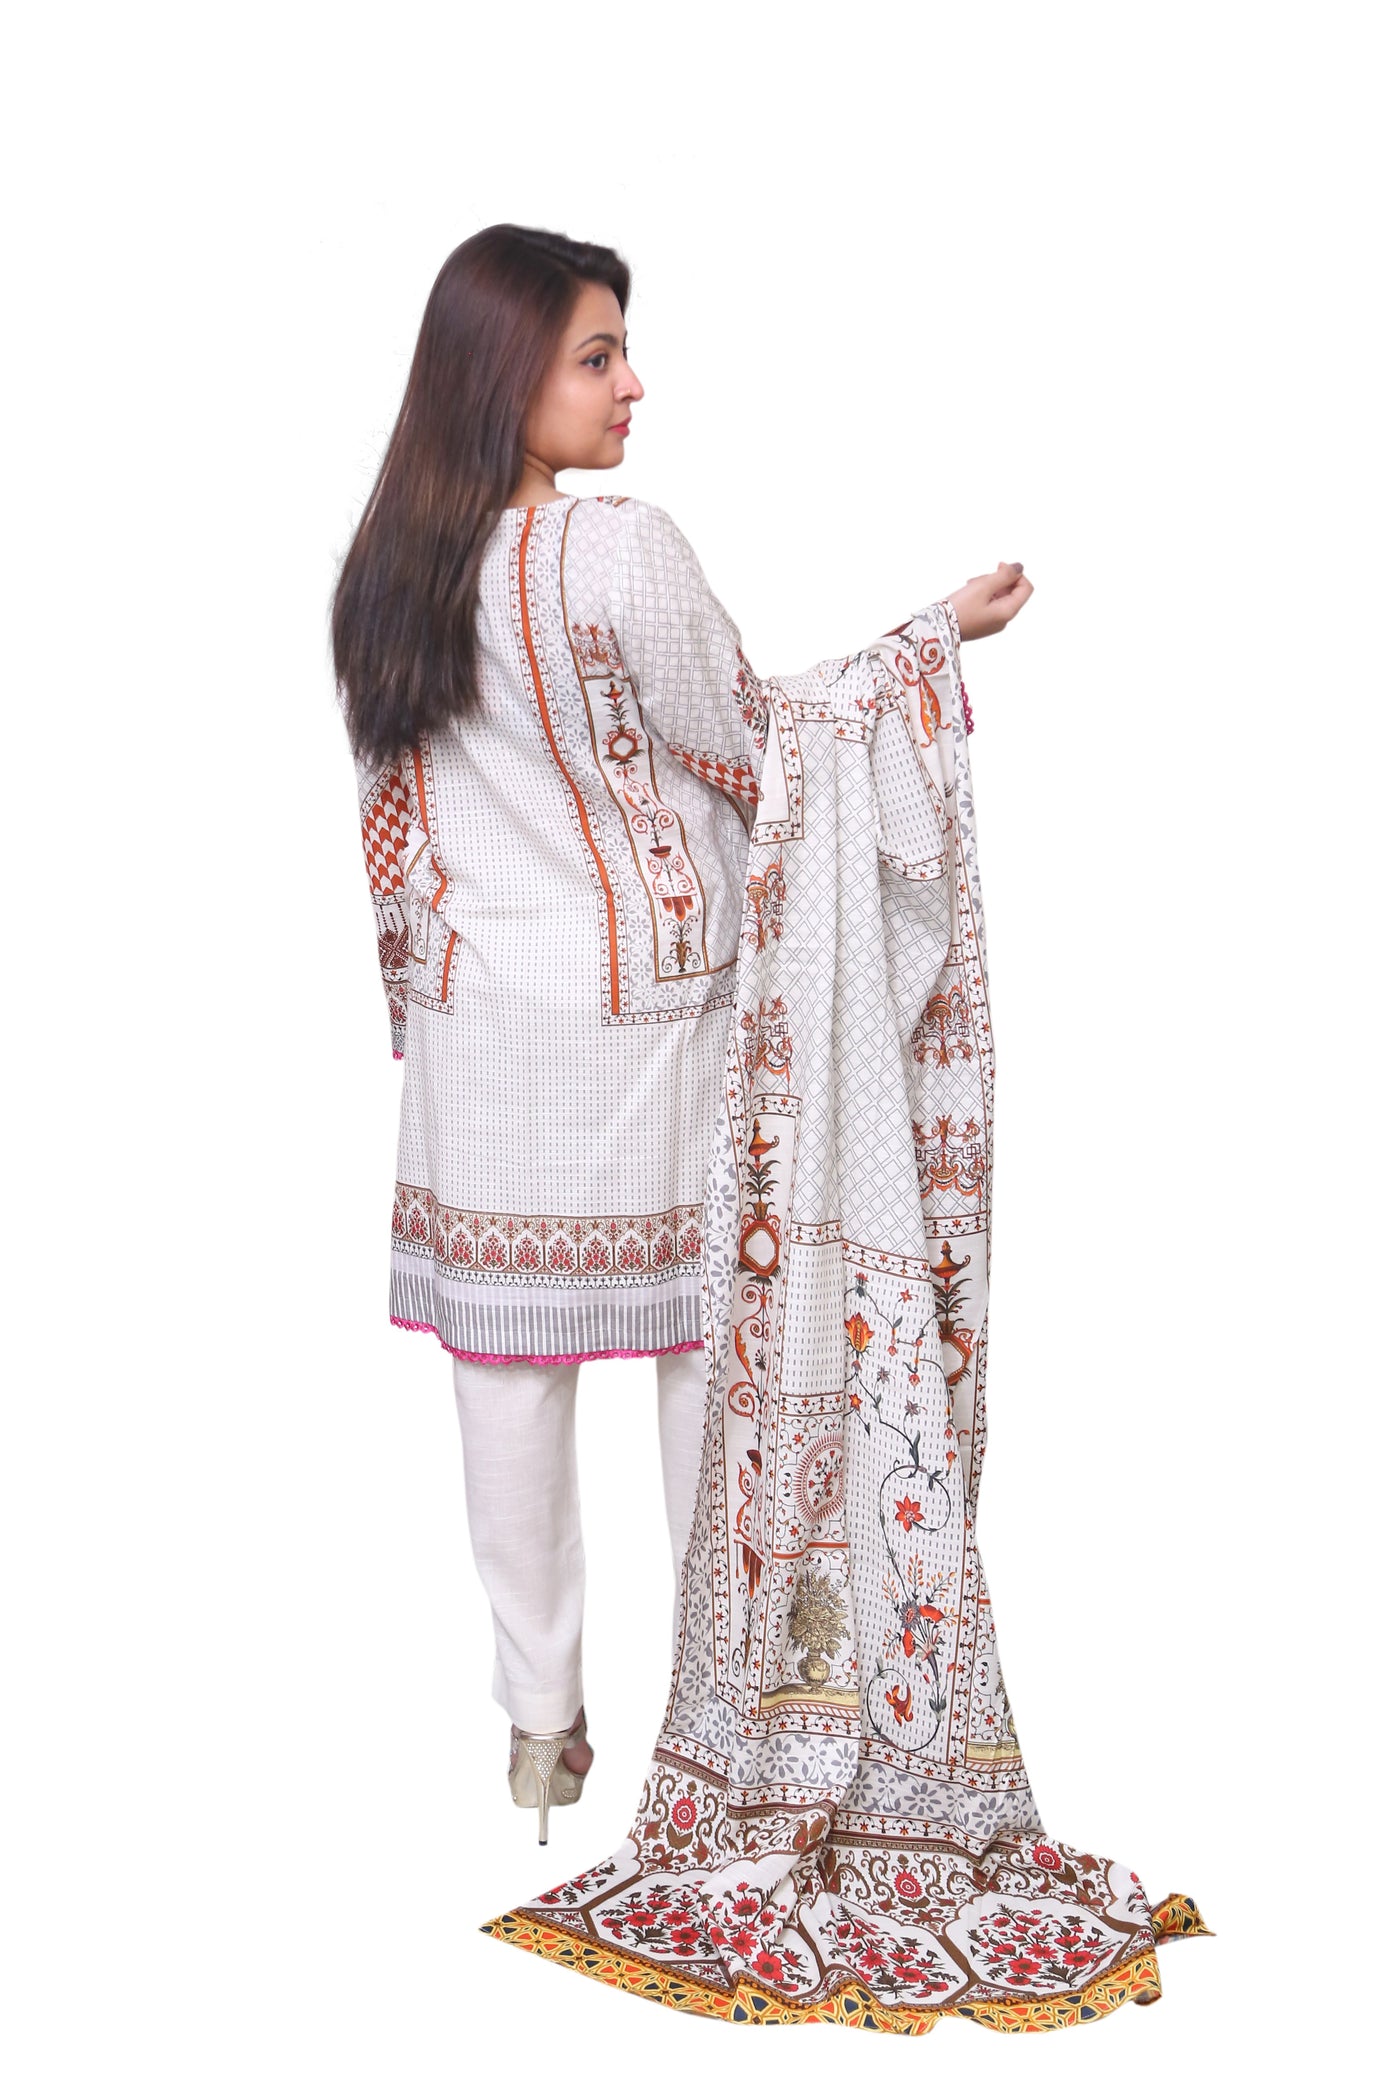 ZS Textile Salina Khaddar Printed Stitched 3 Piece Suit SKP5-007